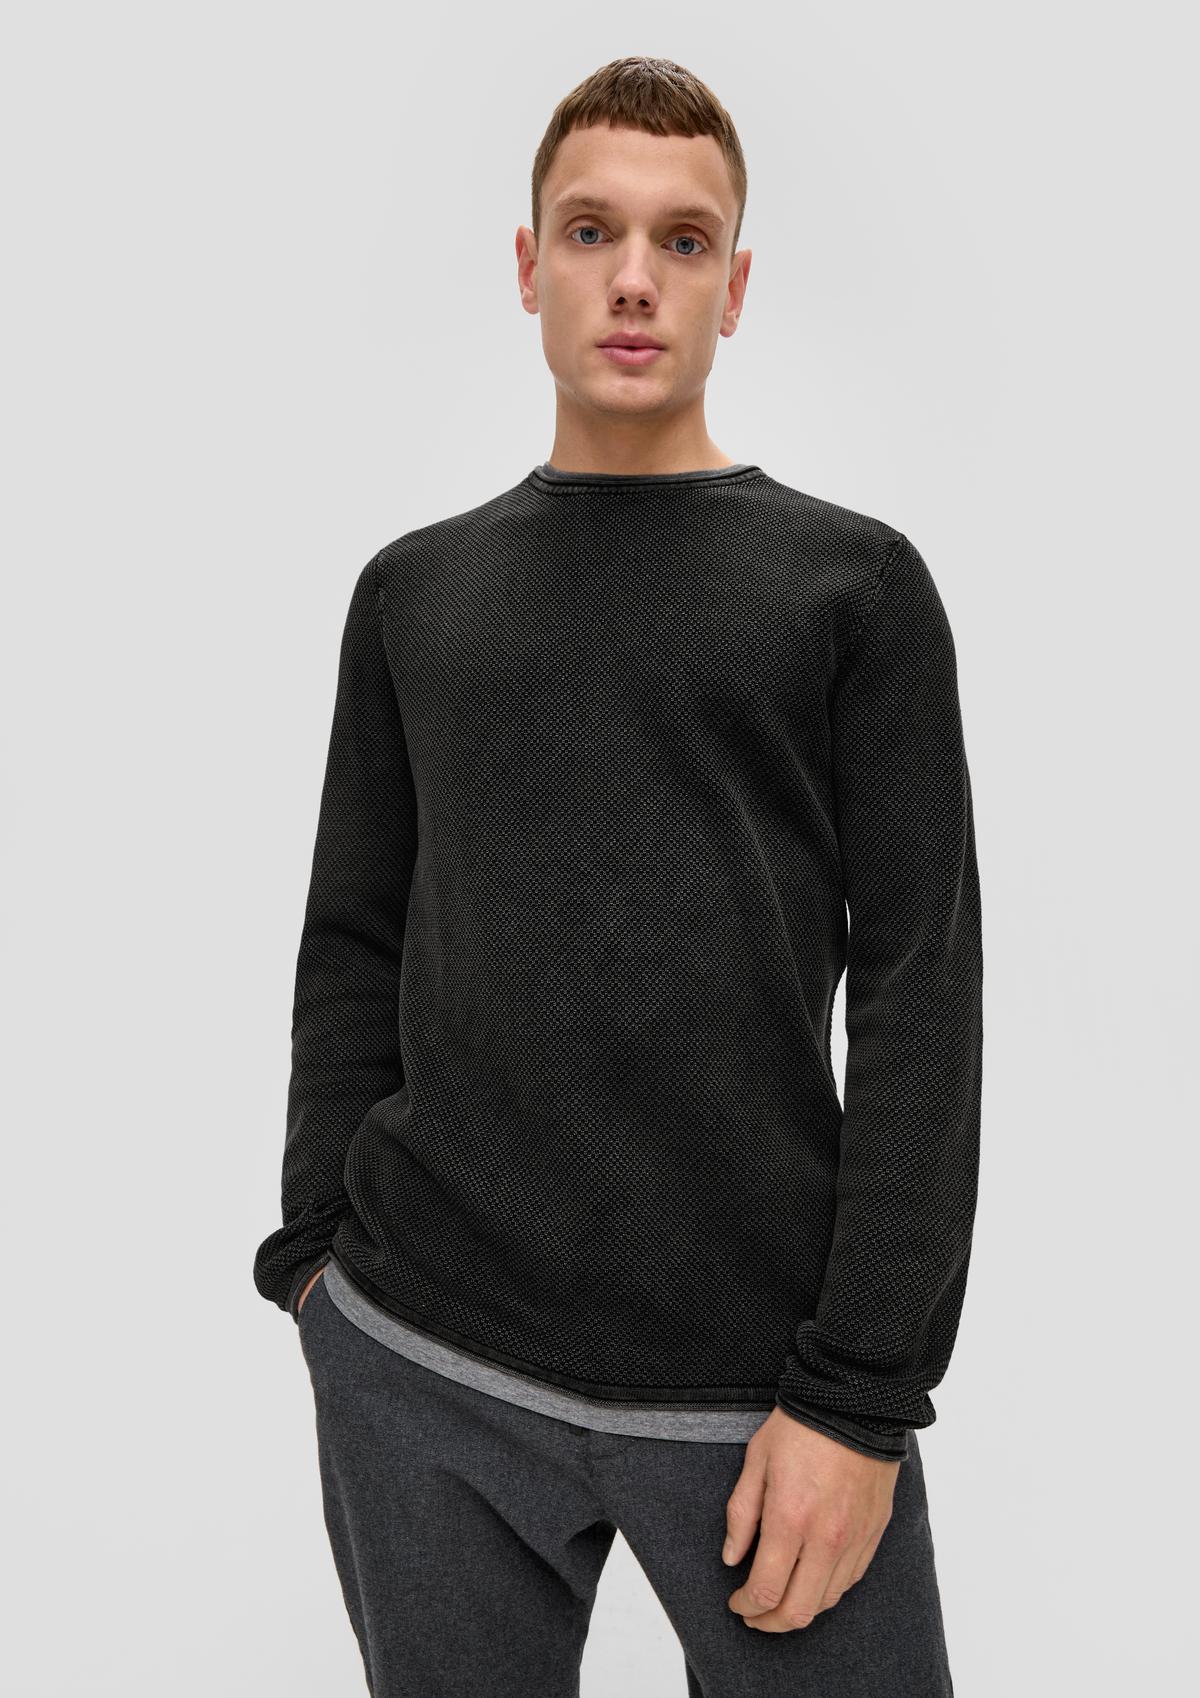 Knitted pullover - dark grey